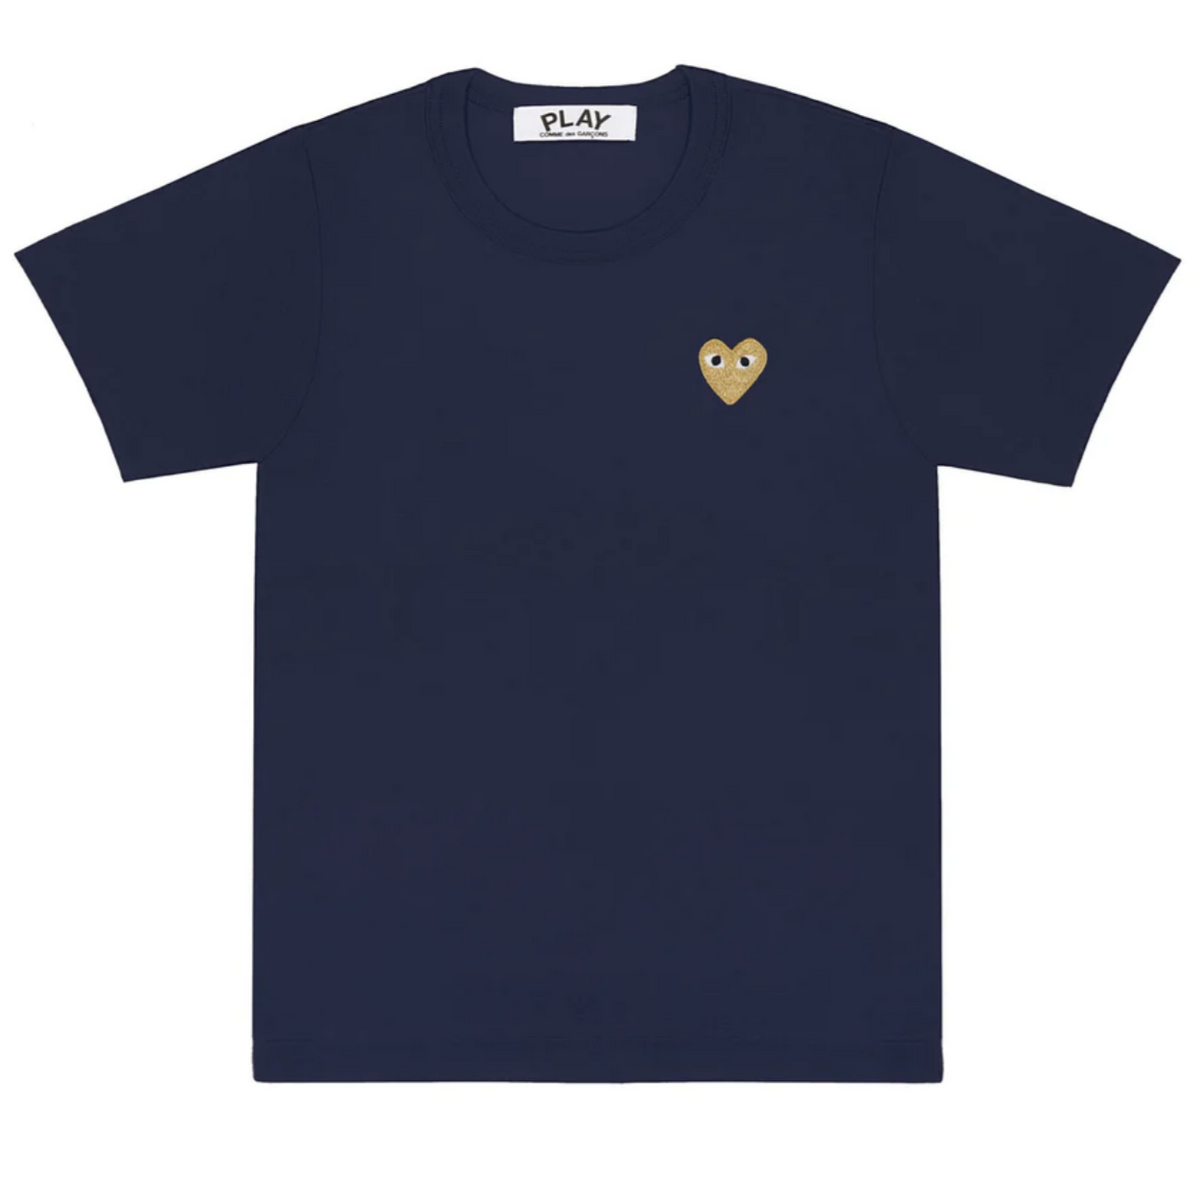 PLAY UNISEX T-Shirt navy Herz gold